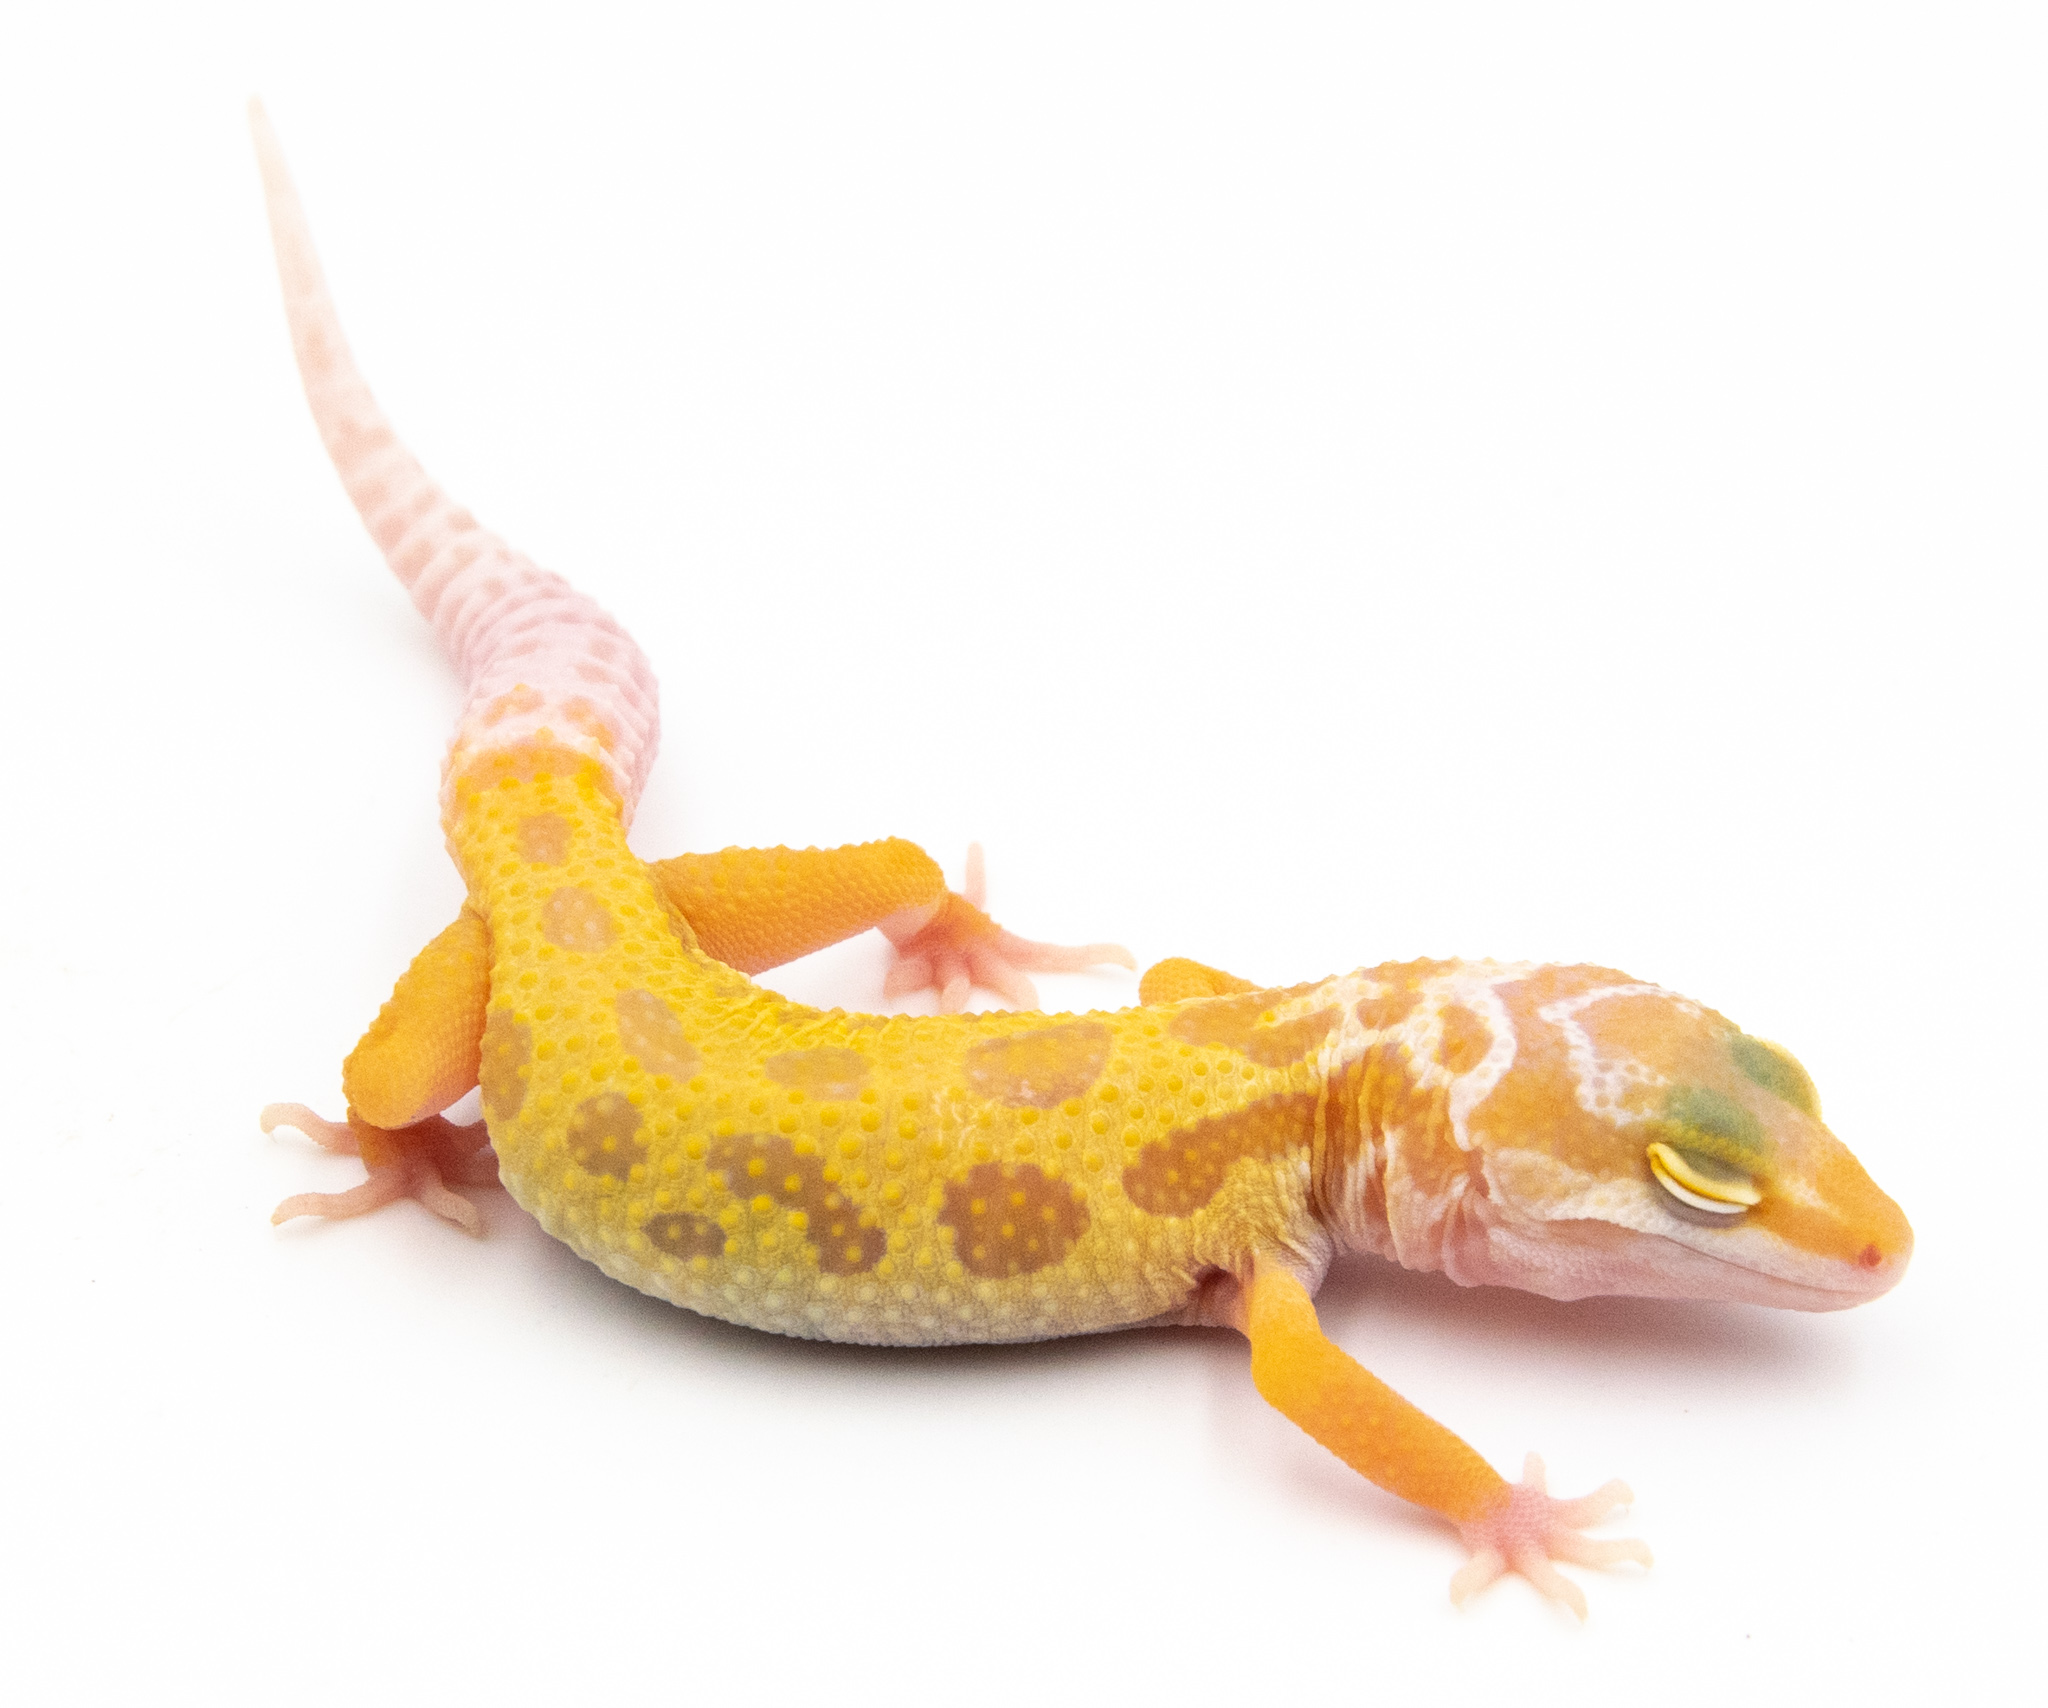 EG03 - Gecko Léopard - Eublepharis Macularius Tremper Murphy - non sexé - NC 2022